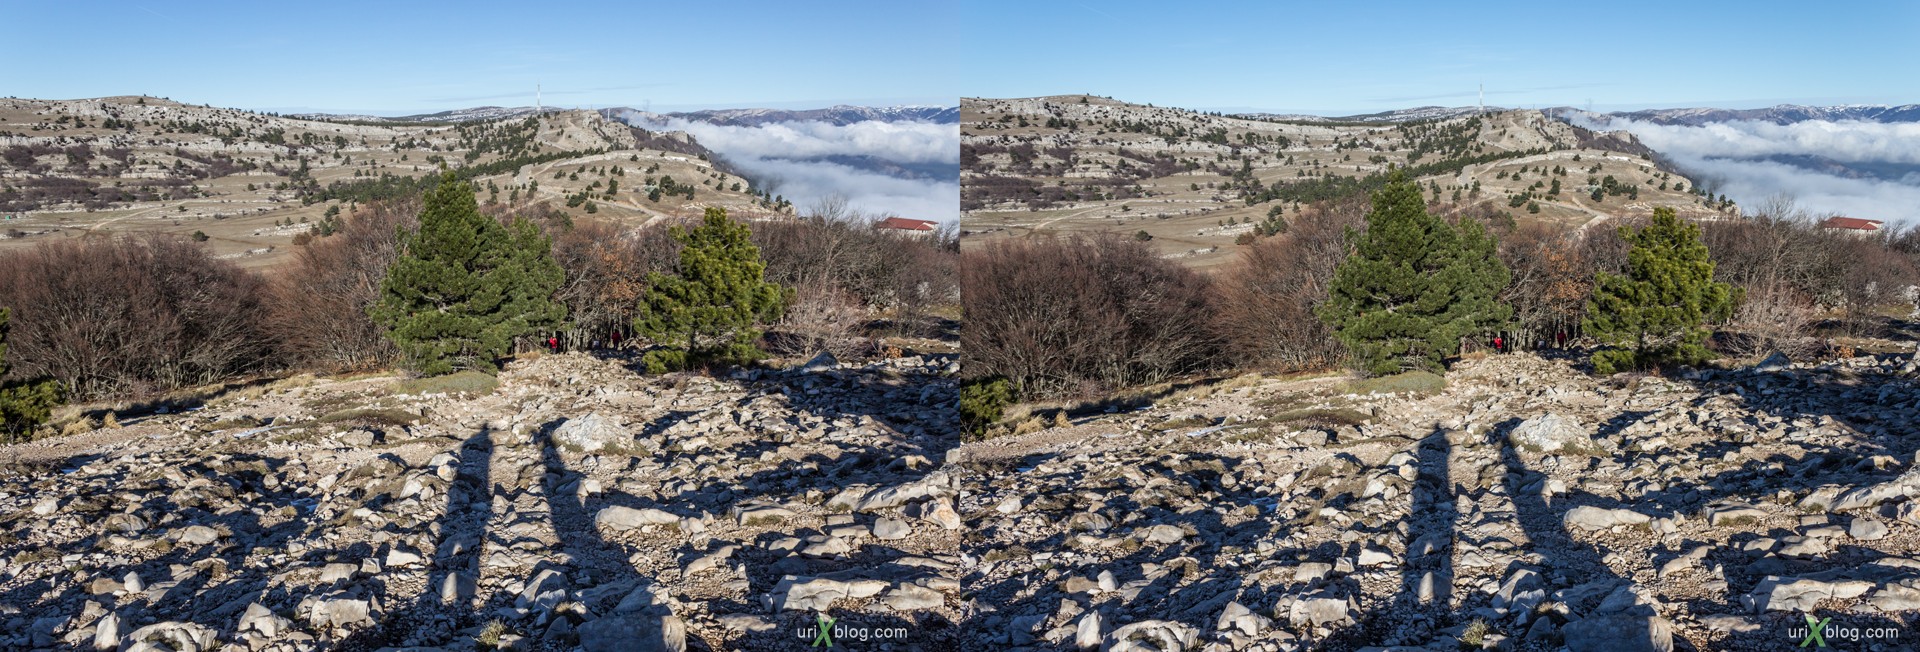 2012, Ai-Petri, mountains, Crimea, Russia, Ukraine, sky, clouds, snow, winter, 3D, stereo pair, cross-eyed, crossview, cross view stereo pair, stereoscopic